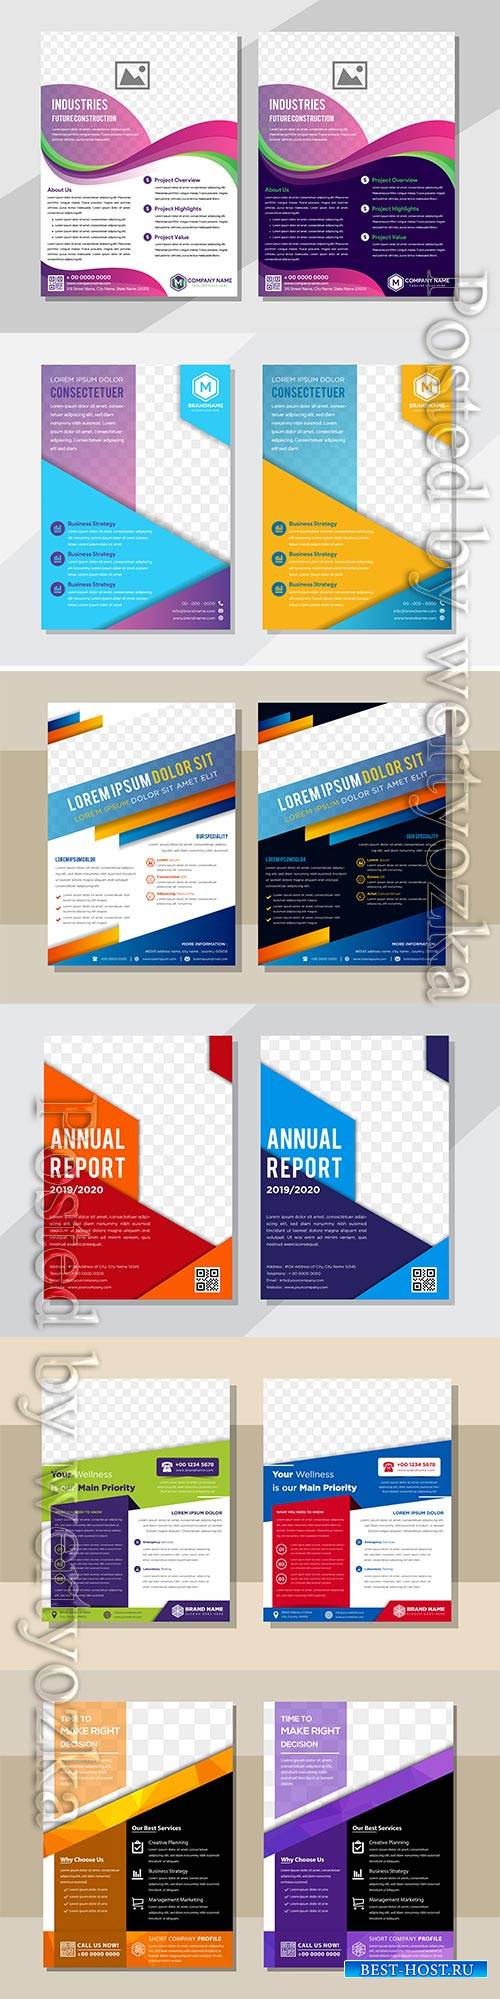 Business flyer template design, brochure vector illustration